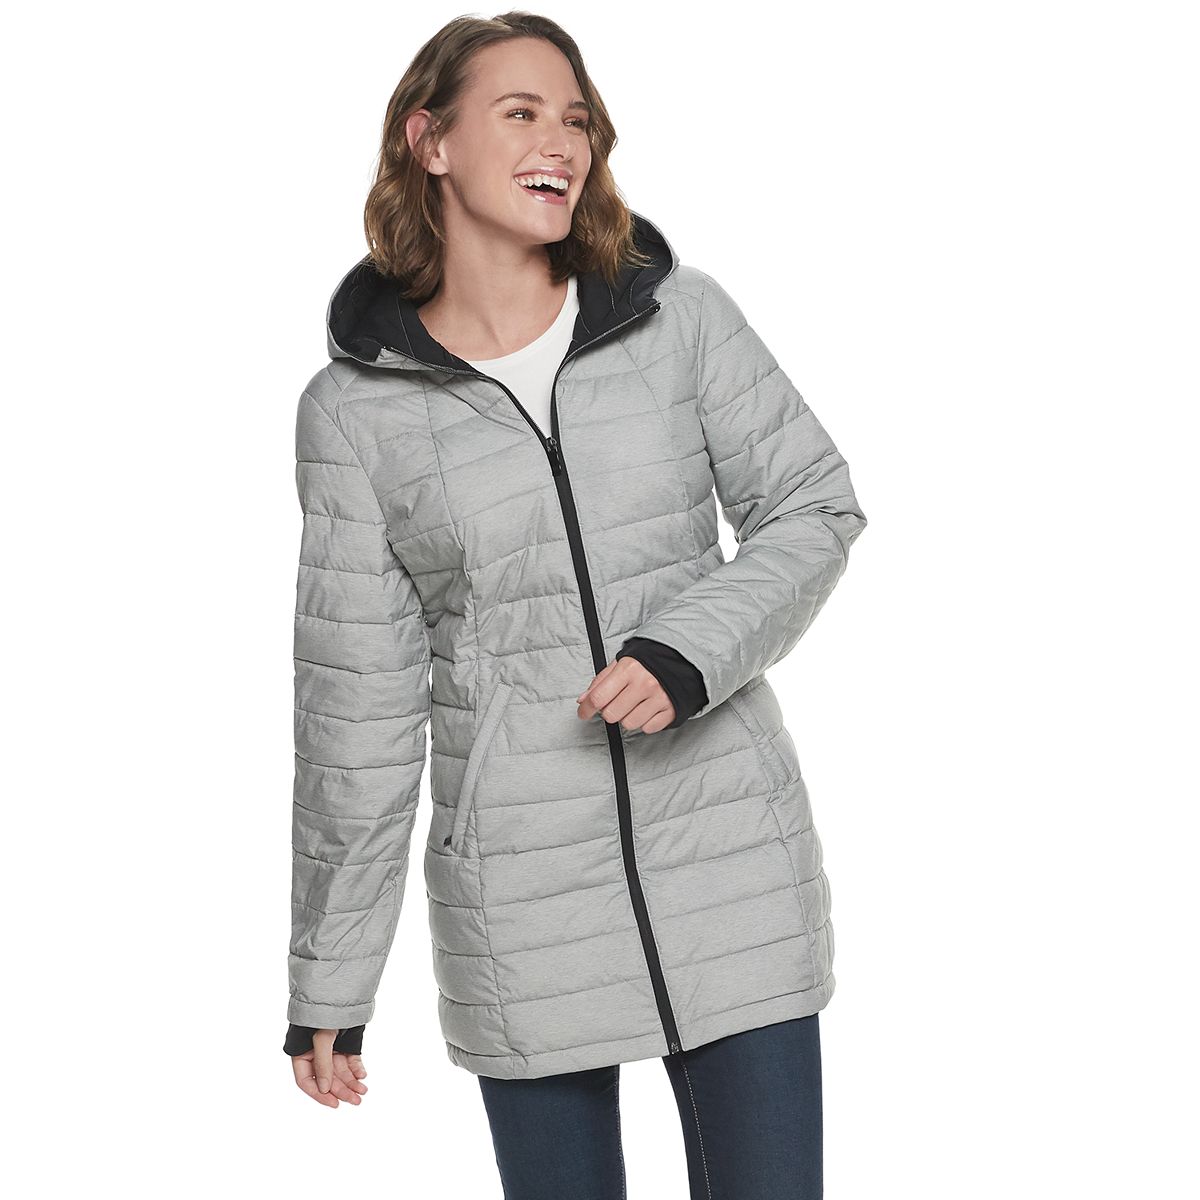 Women's ZeroXposur Jackets & Coats: Shop for Outwerwear Essentials | Kohl's